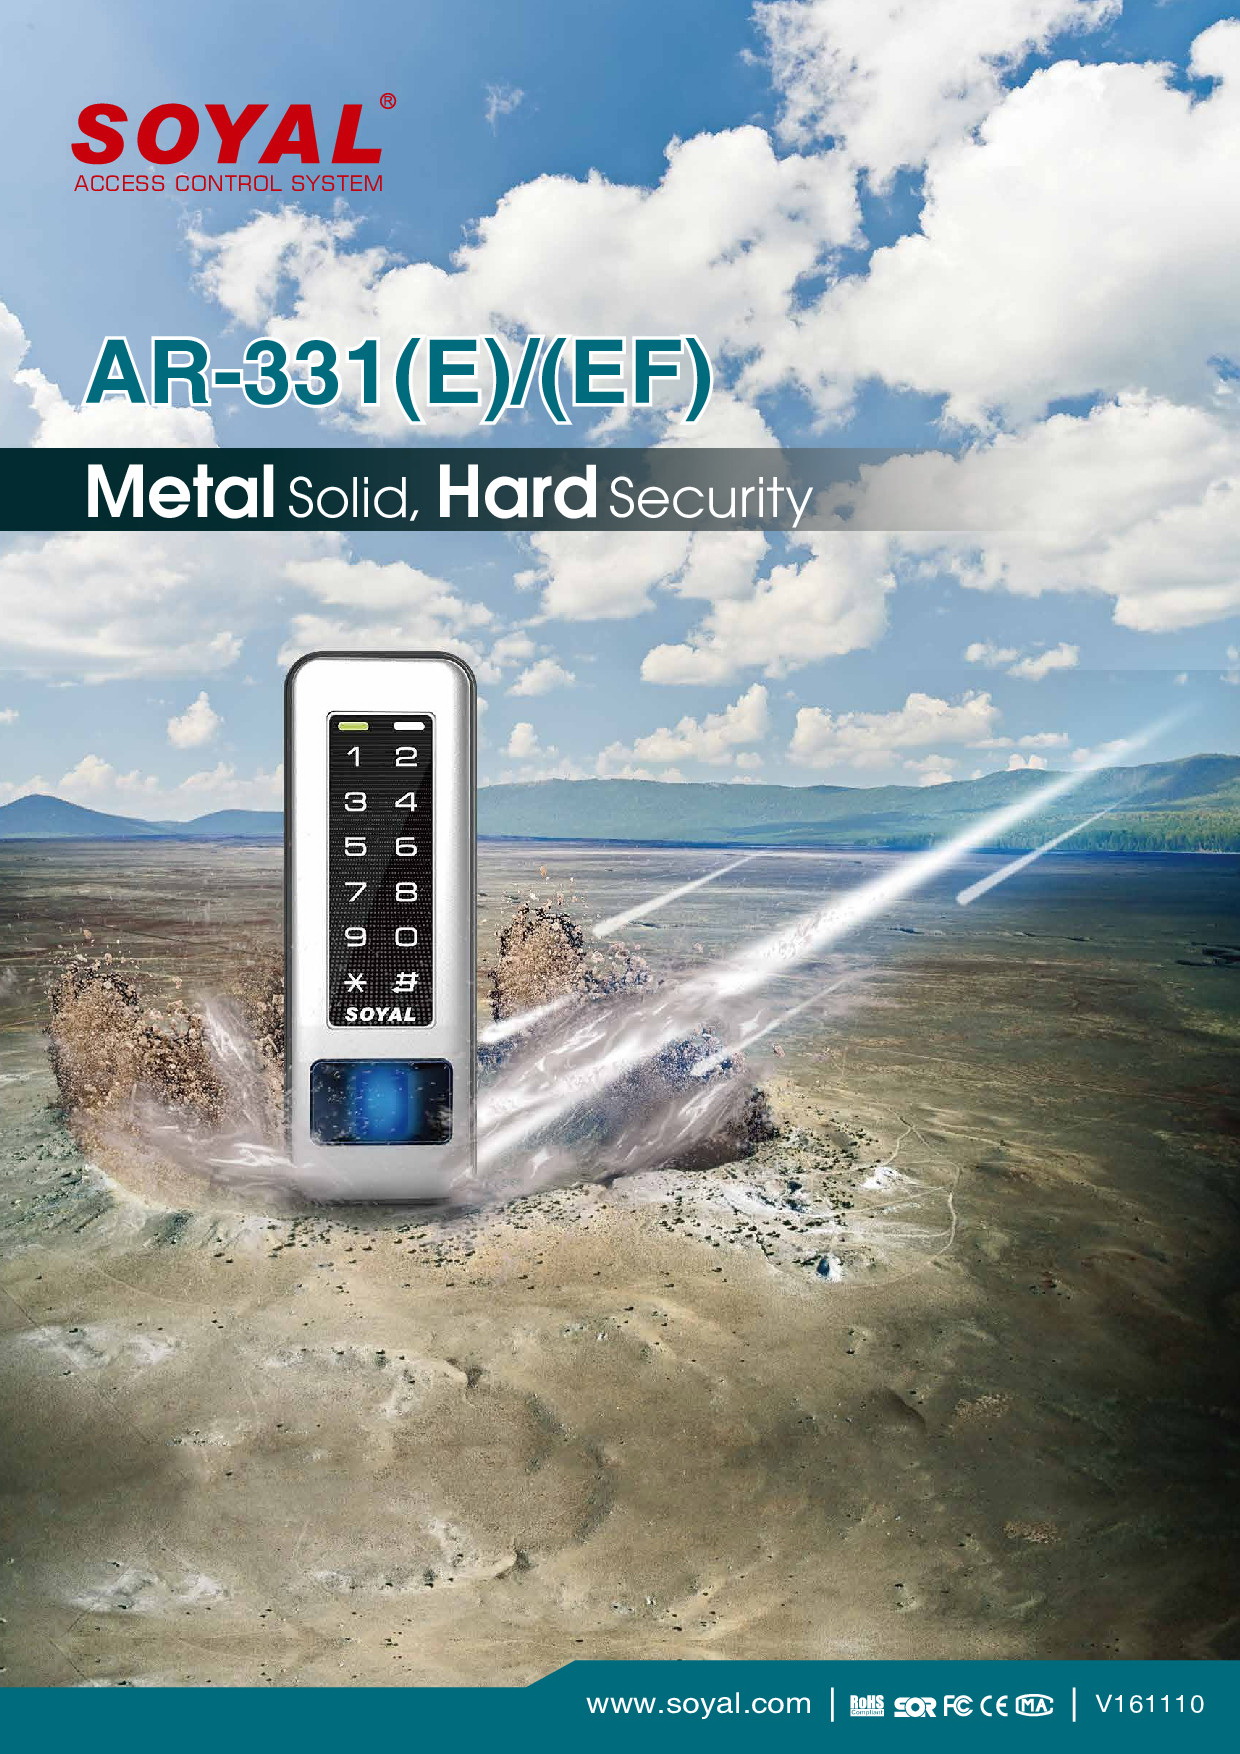 AR-331 Metal solid Hard Security